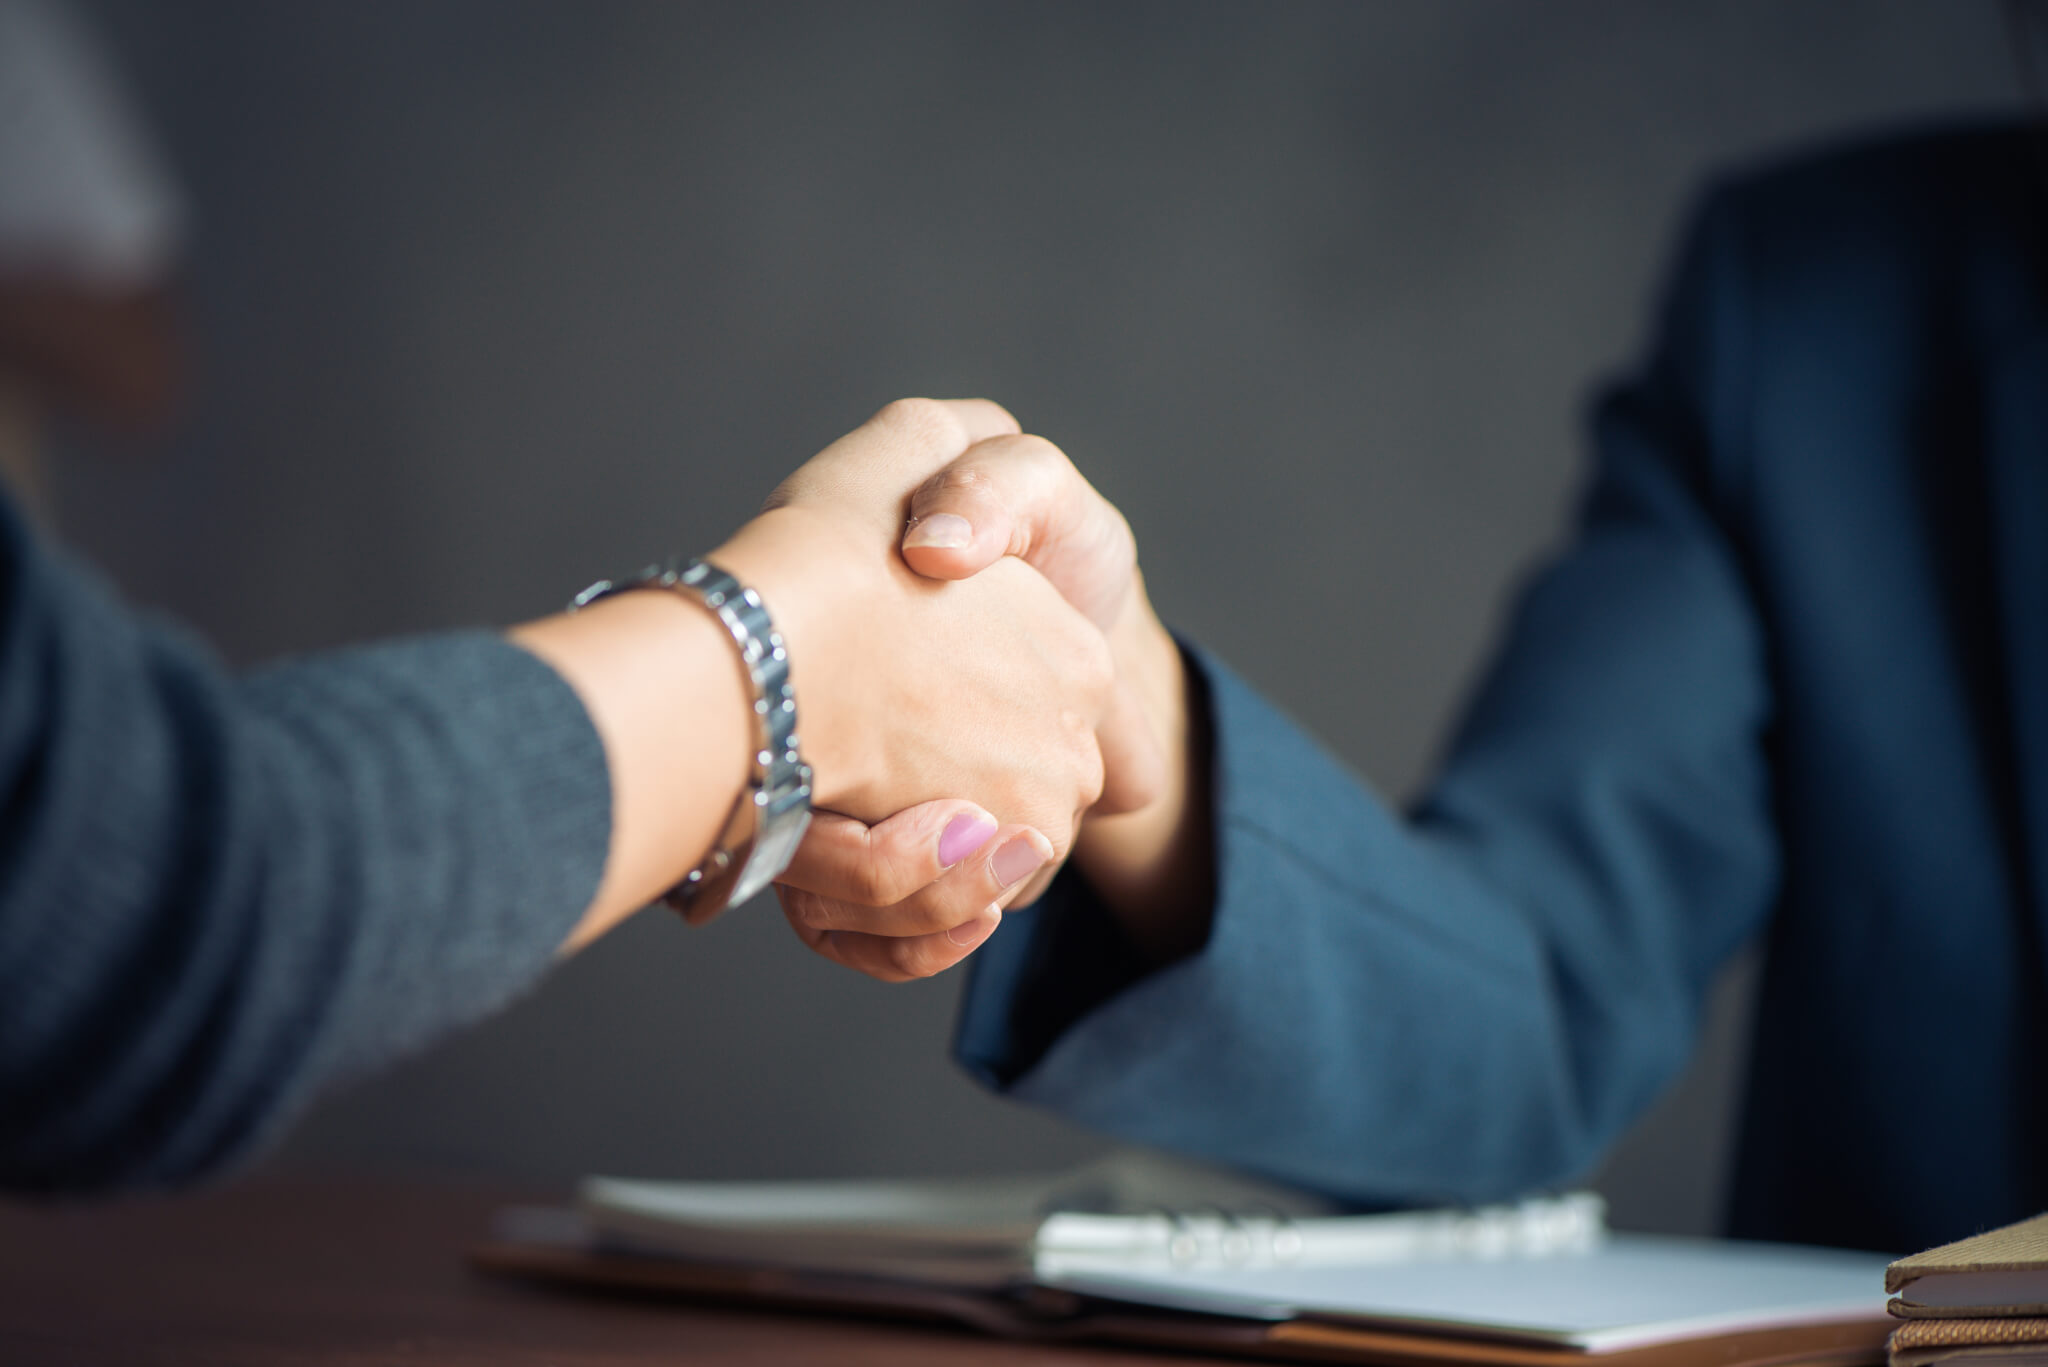 Negotiating business,Image businesswomen handshake,happy with wo